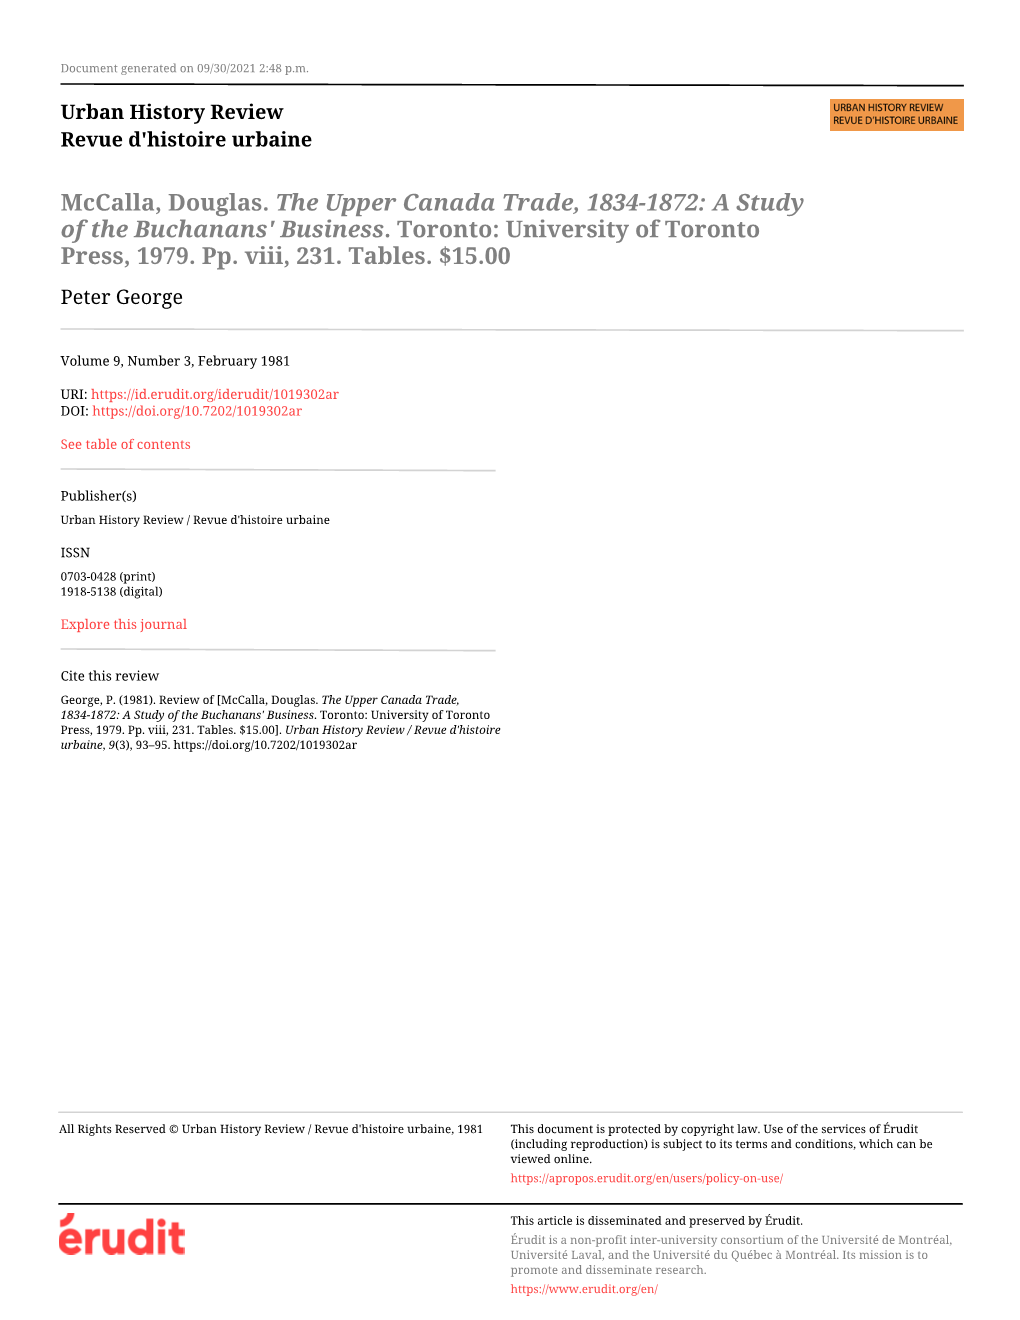 Mccalla, Douglas. the Upper Canada Trade, 1834-1872: a Study of the Buchanans' Business. Toronto: University of Toronto Press, 1979